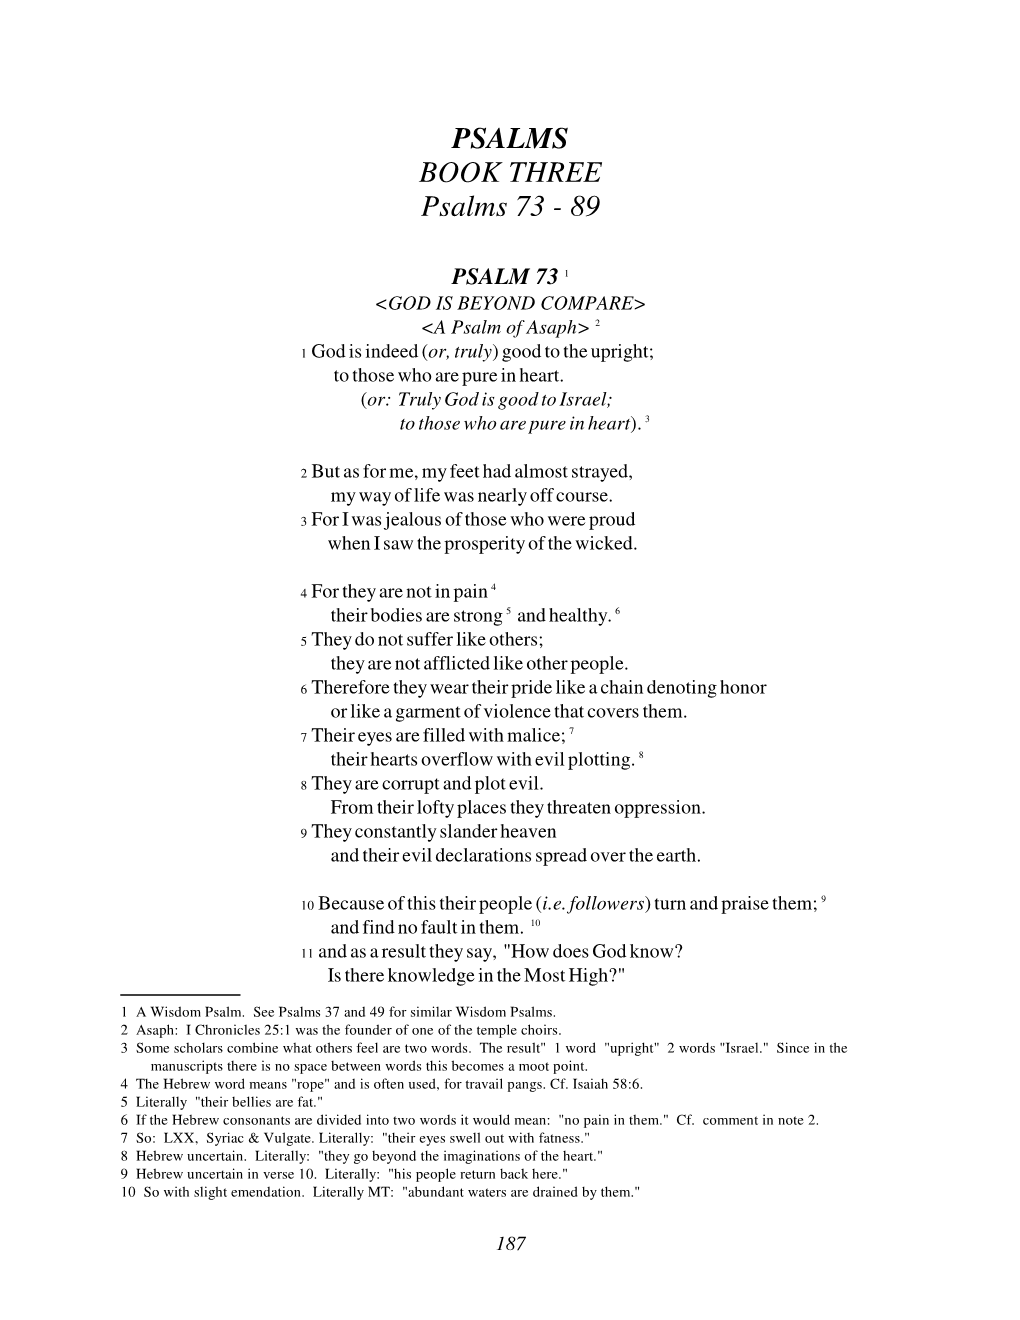 PSALMS BOOK THREE Psalms 73 - 89